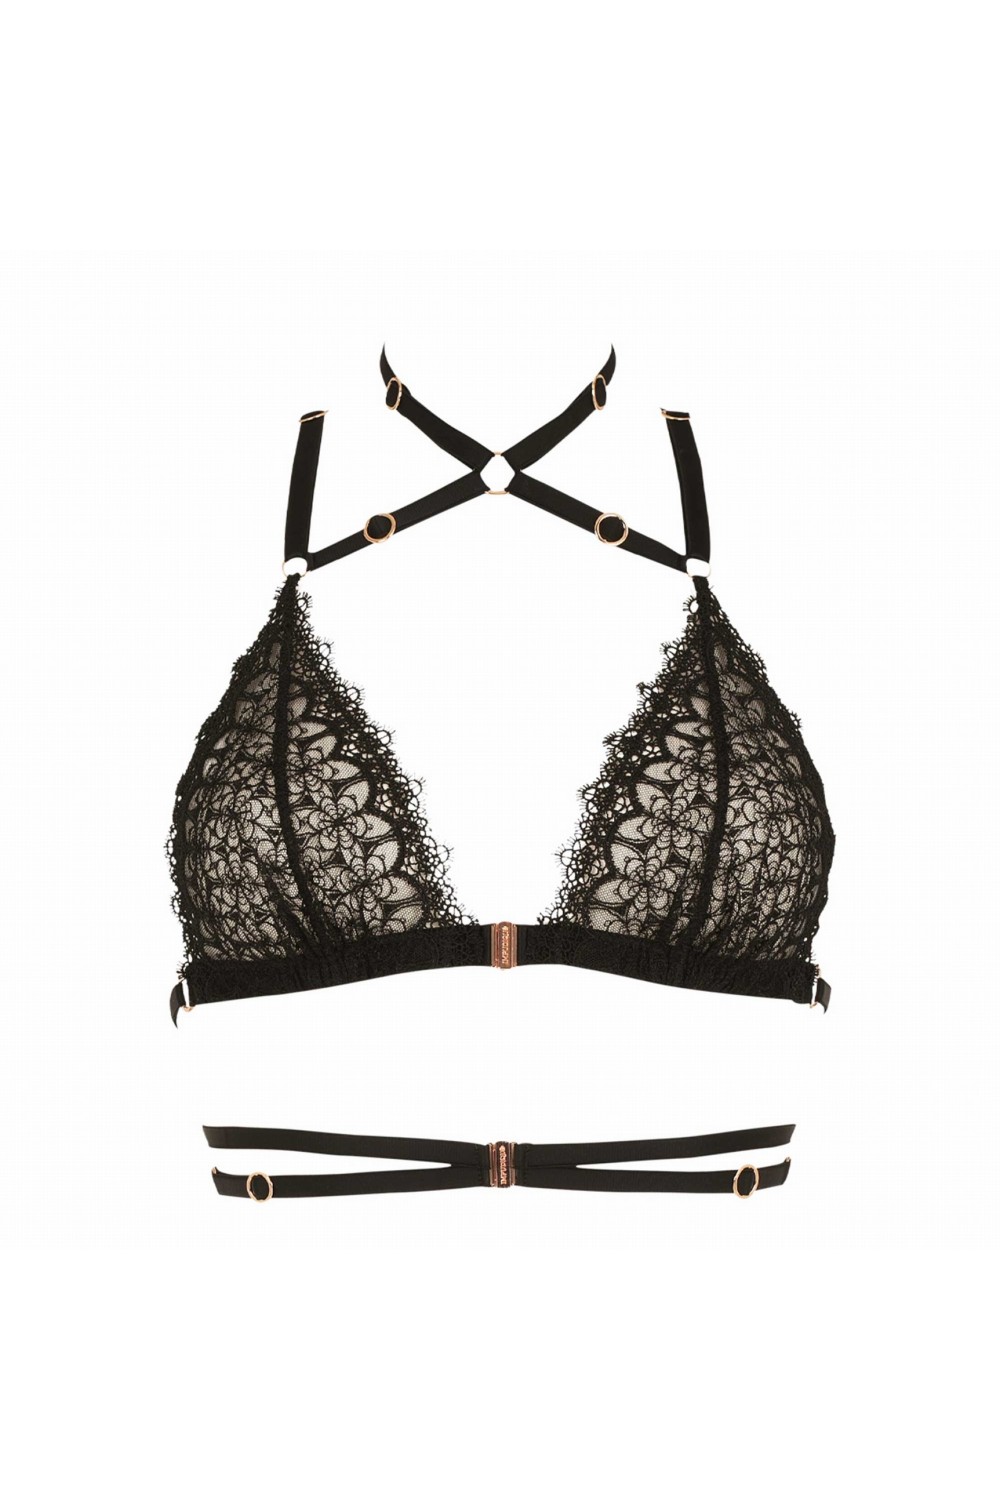 Bijou Black Bralette - Luxury lingerie – Impudique Official Website